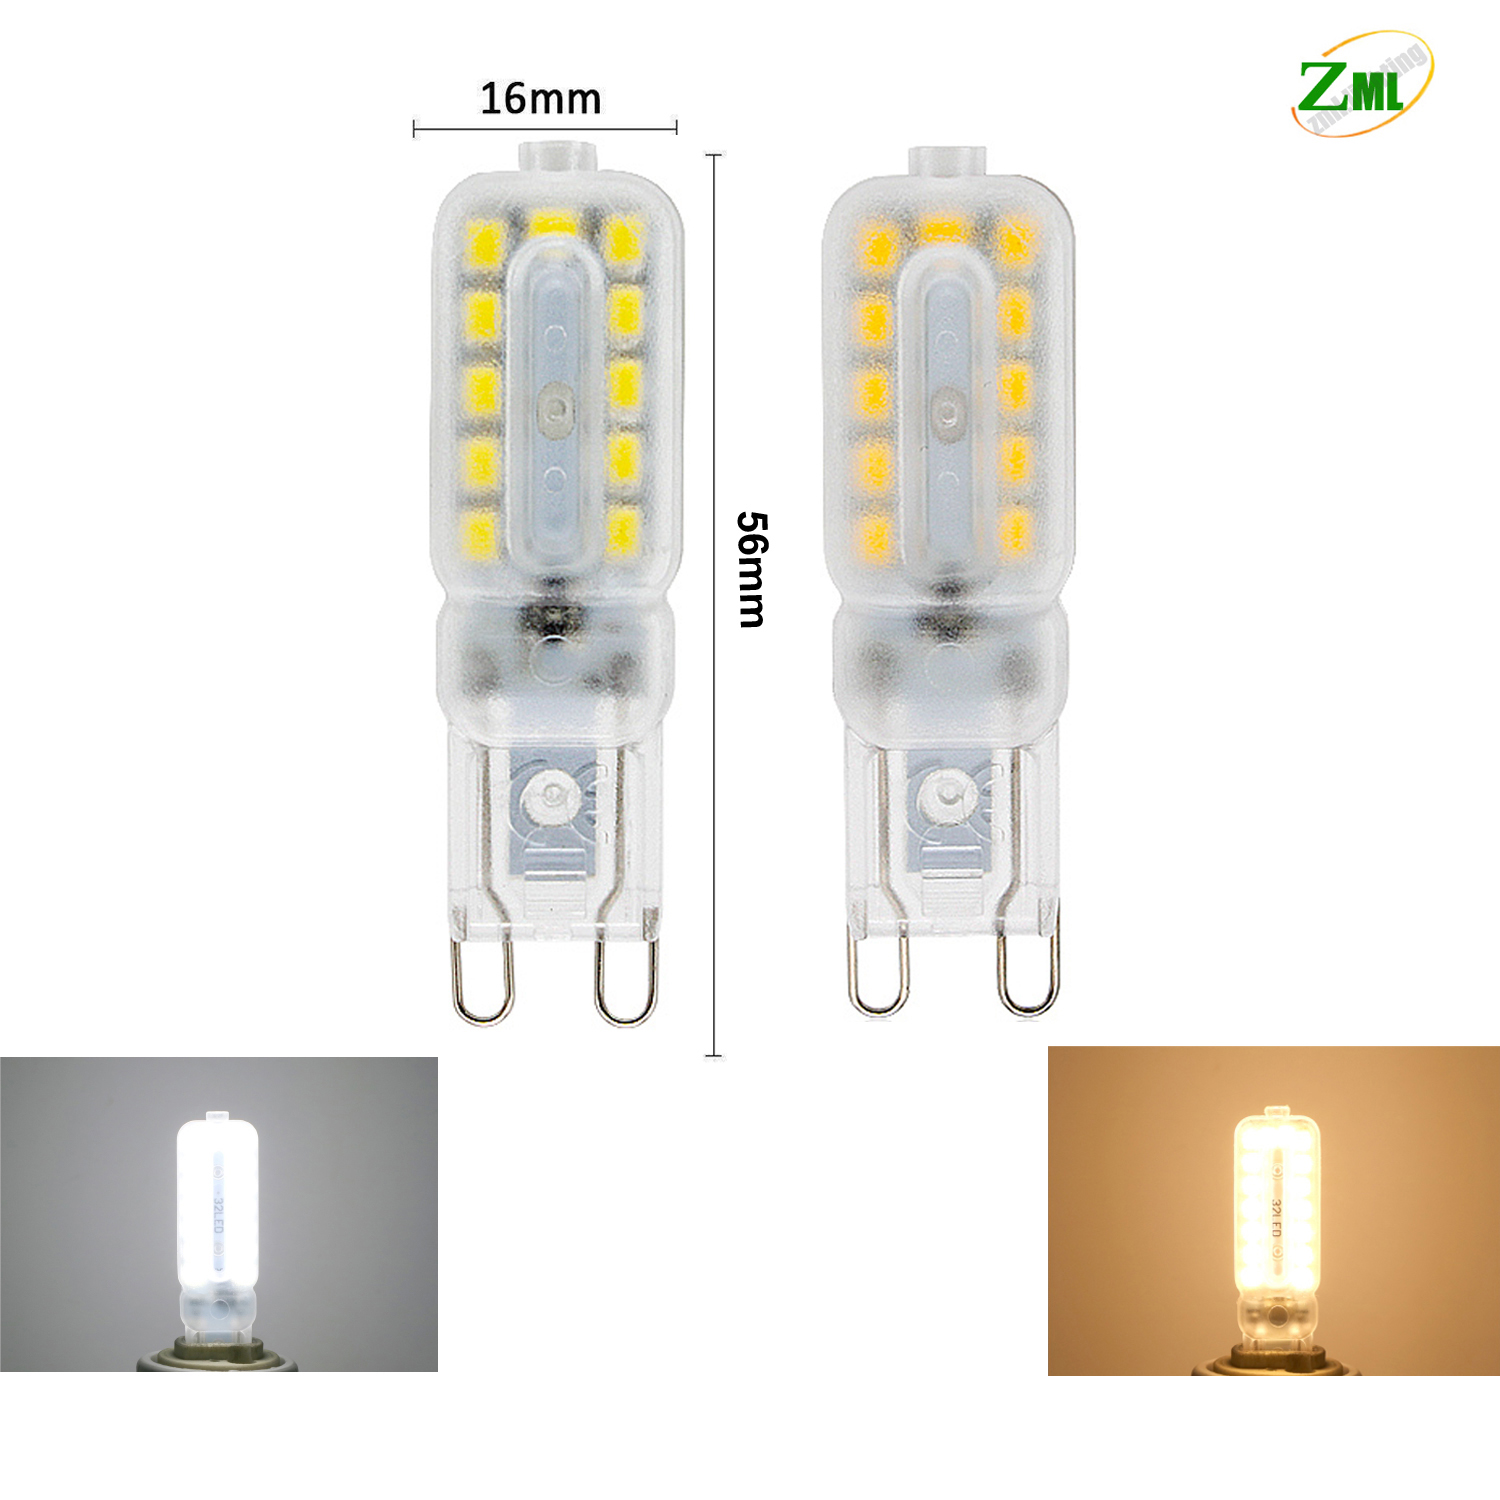 10Pcs/lot Brightest G9 LED Lamp G4 AC 220V 230V 240V 6W 9W Glass COB LED  Bulb Warm/Cold White Spotlight Replace Halogen Light